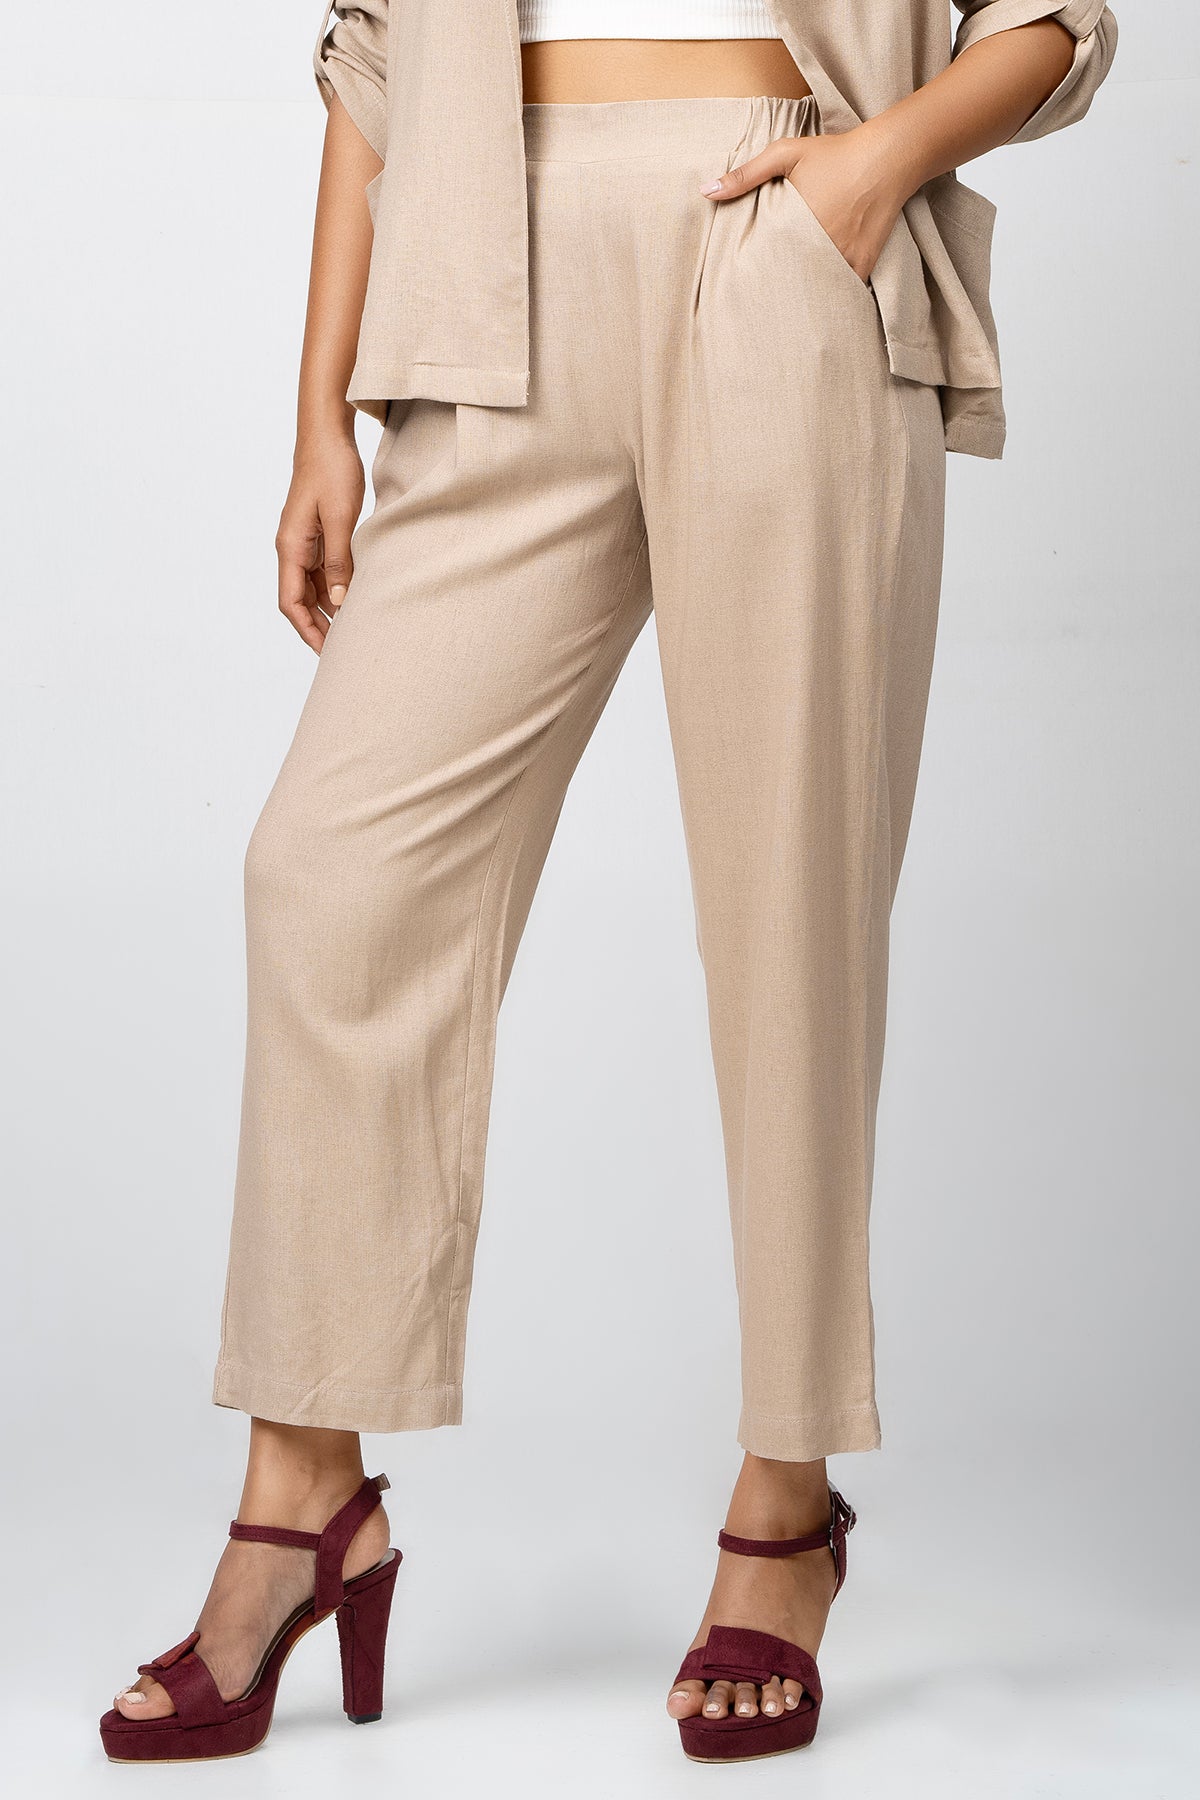 Modano Women's Linen Casual Pant